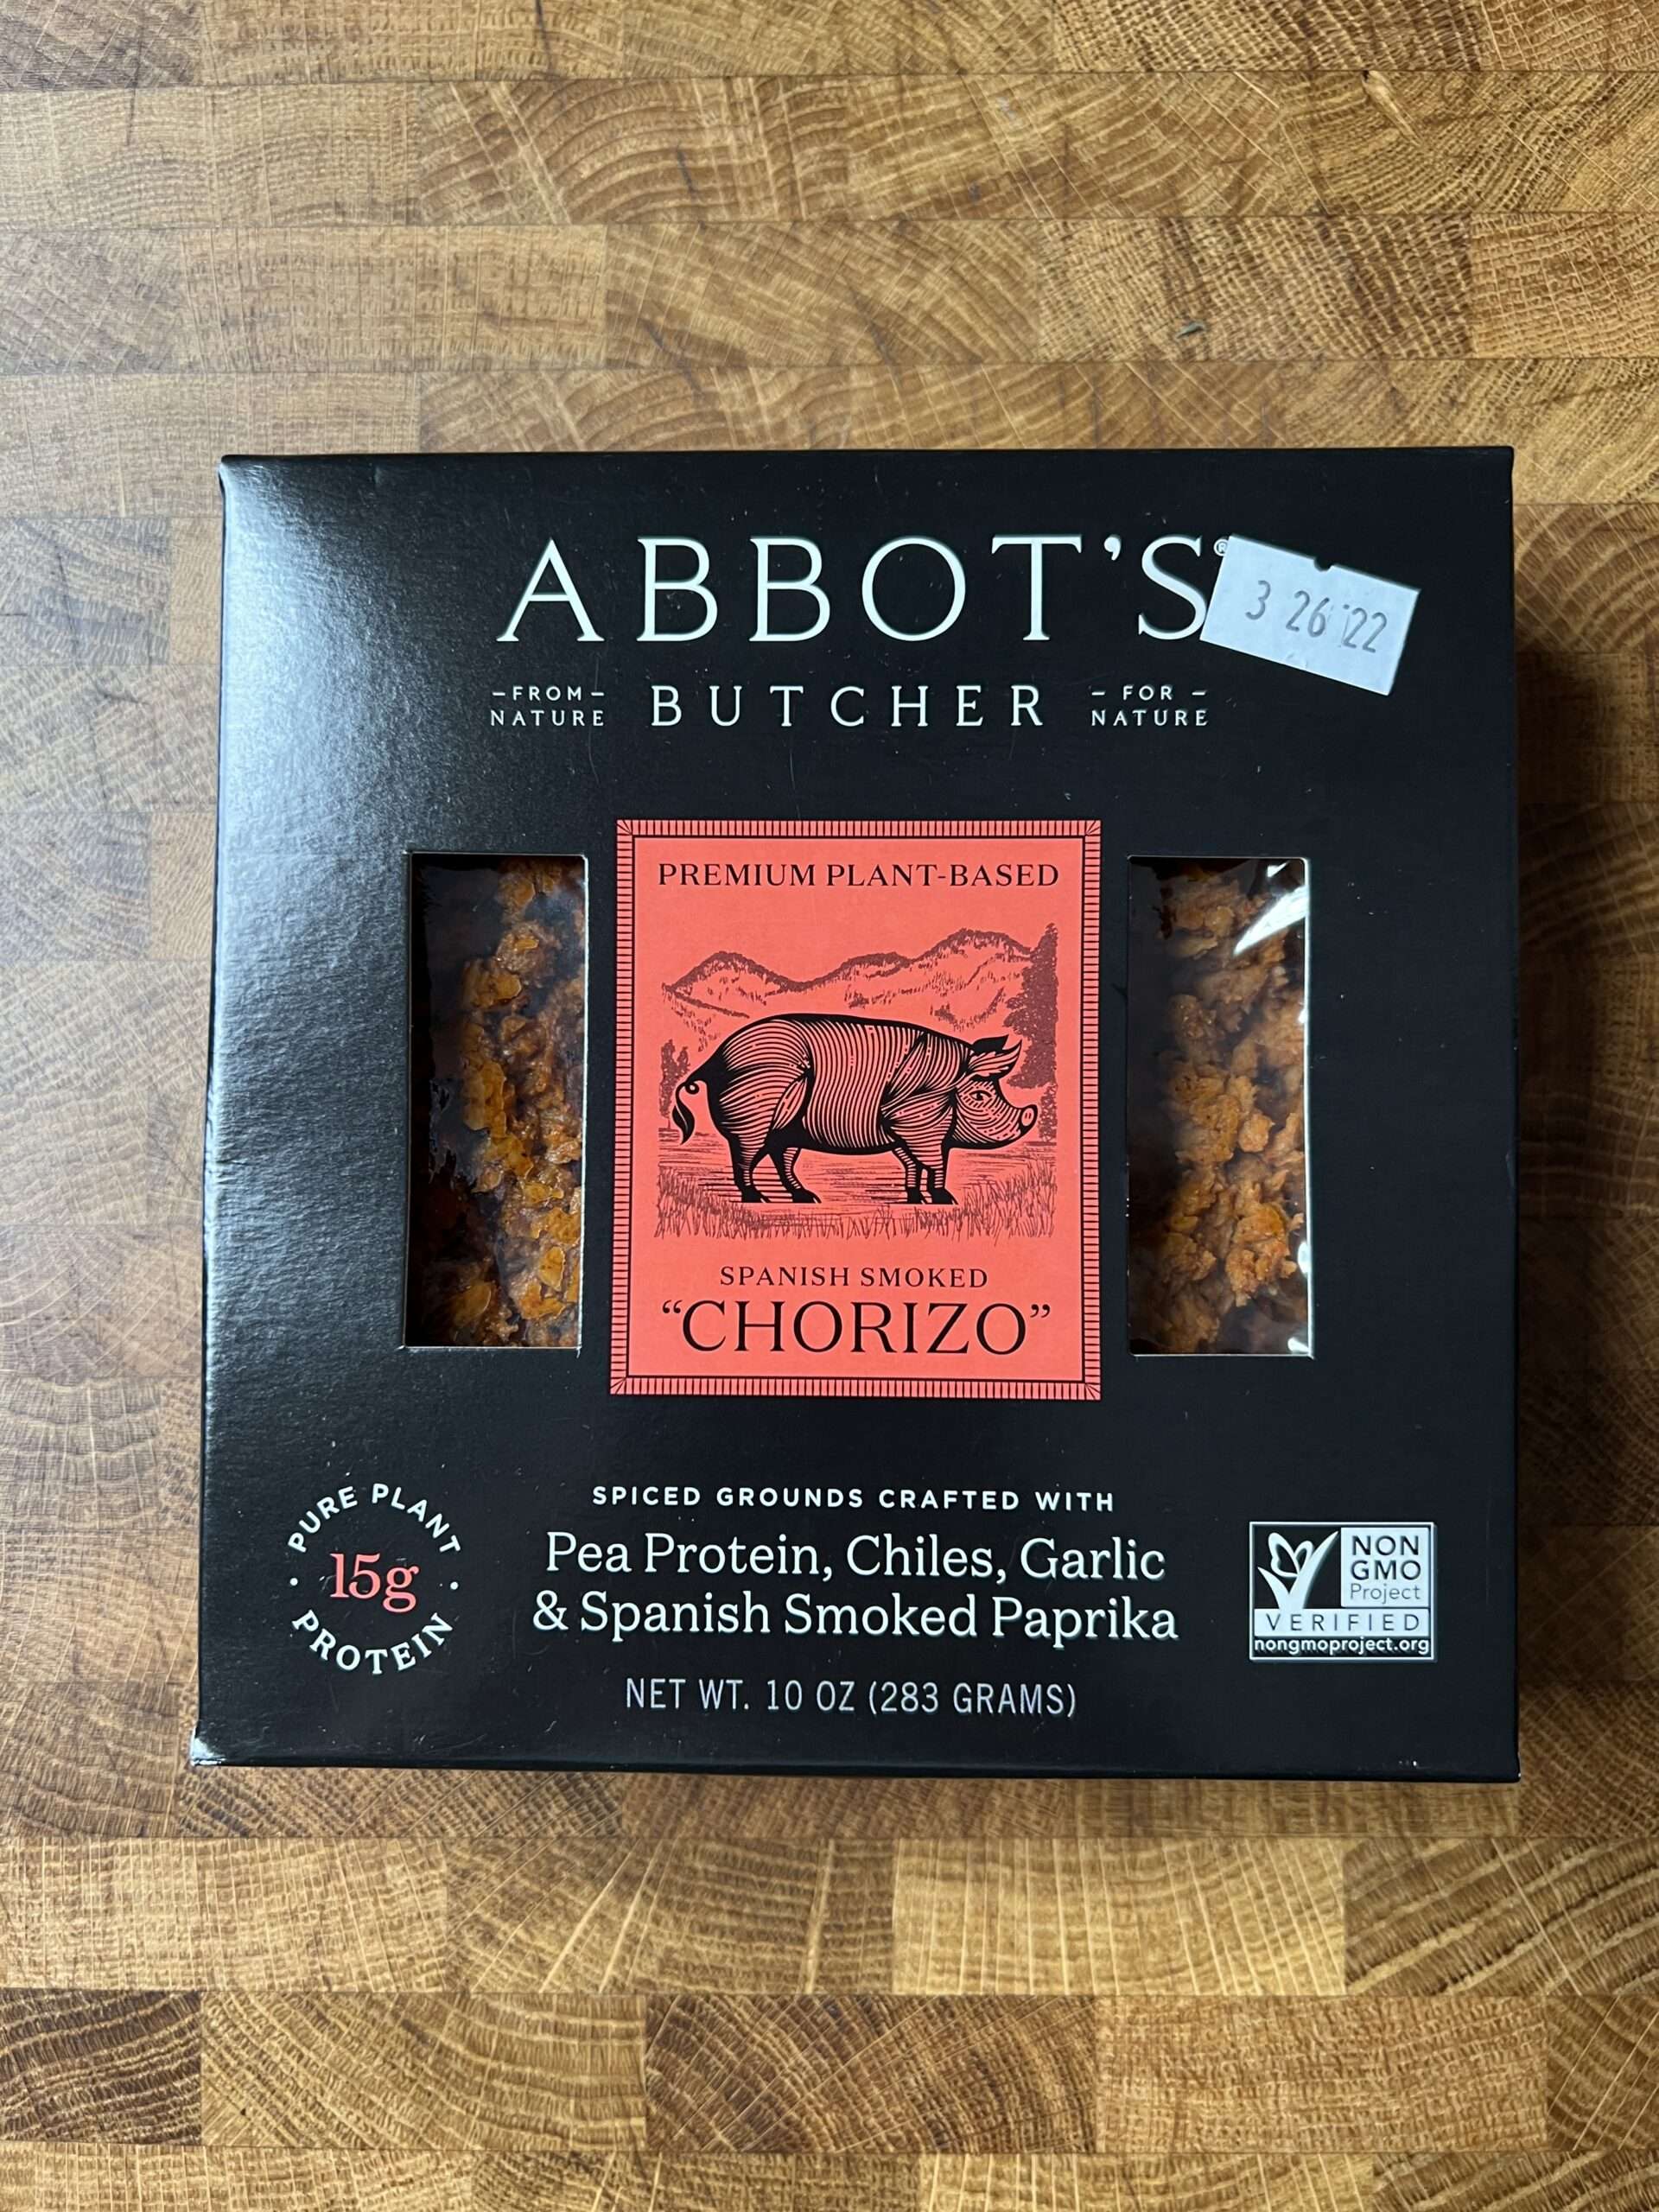 A box of Abbot\'s butcher premium plant-based meat Spanish smoked chorizo.